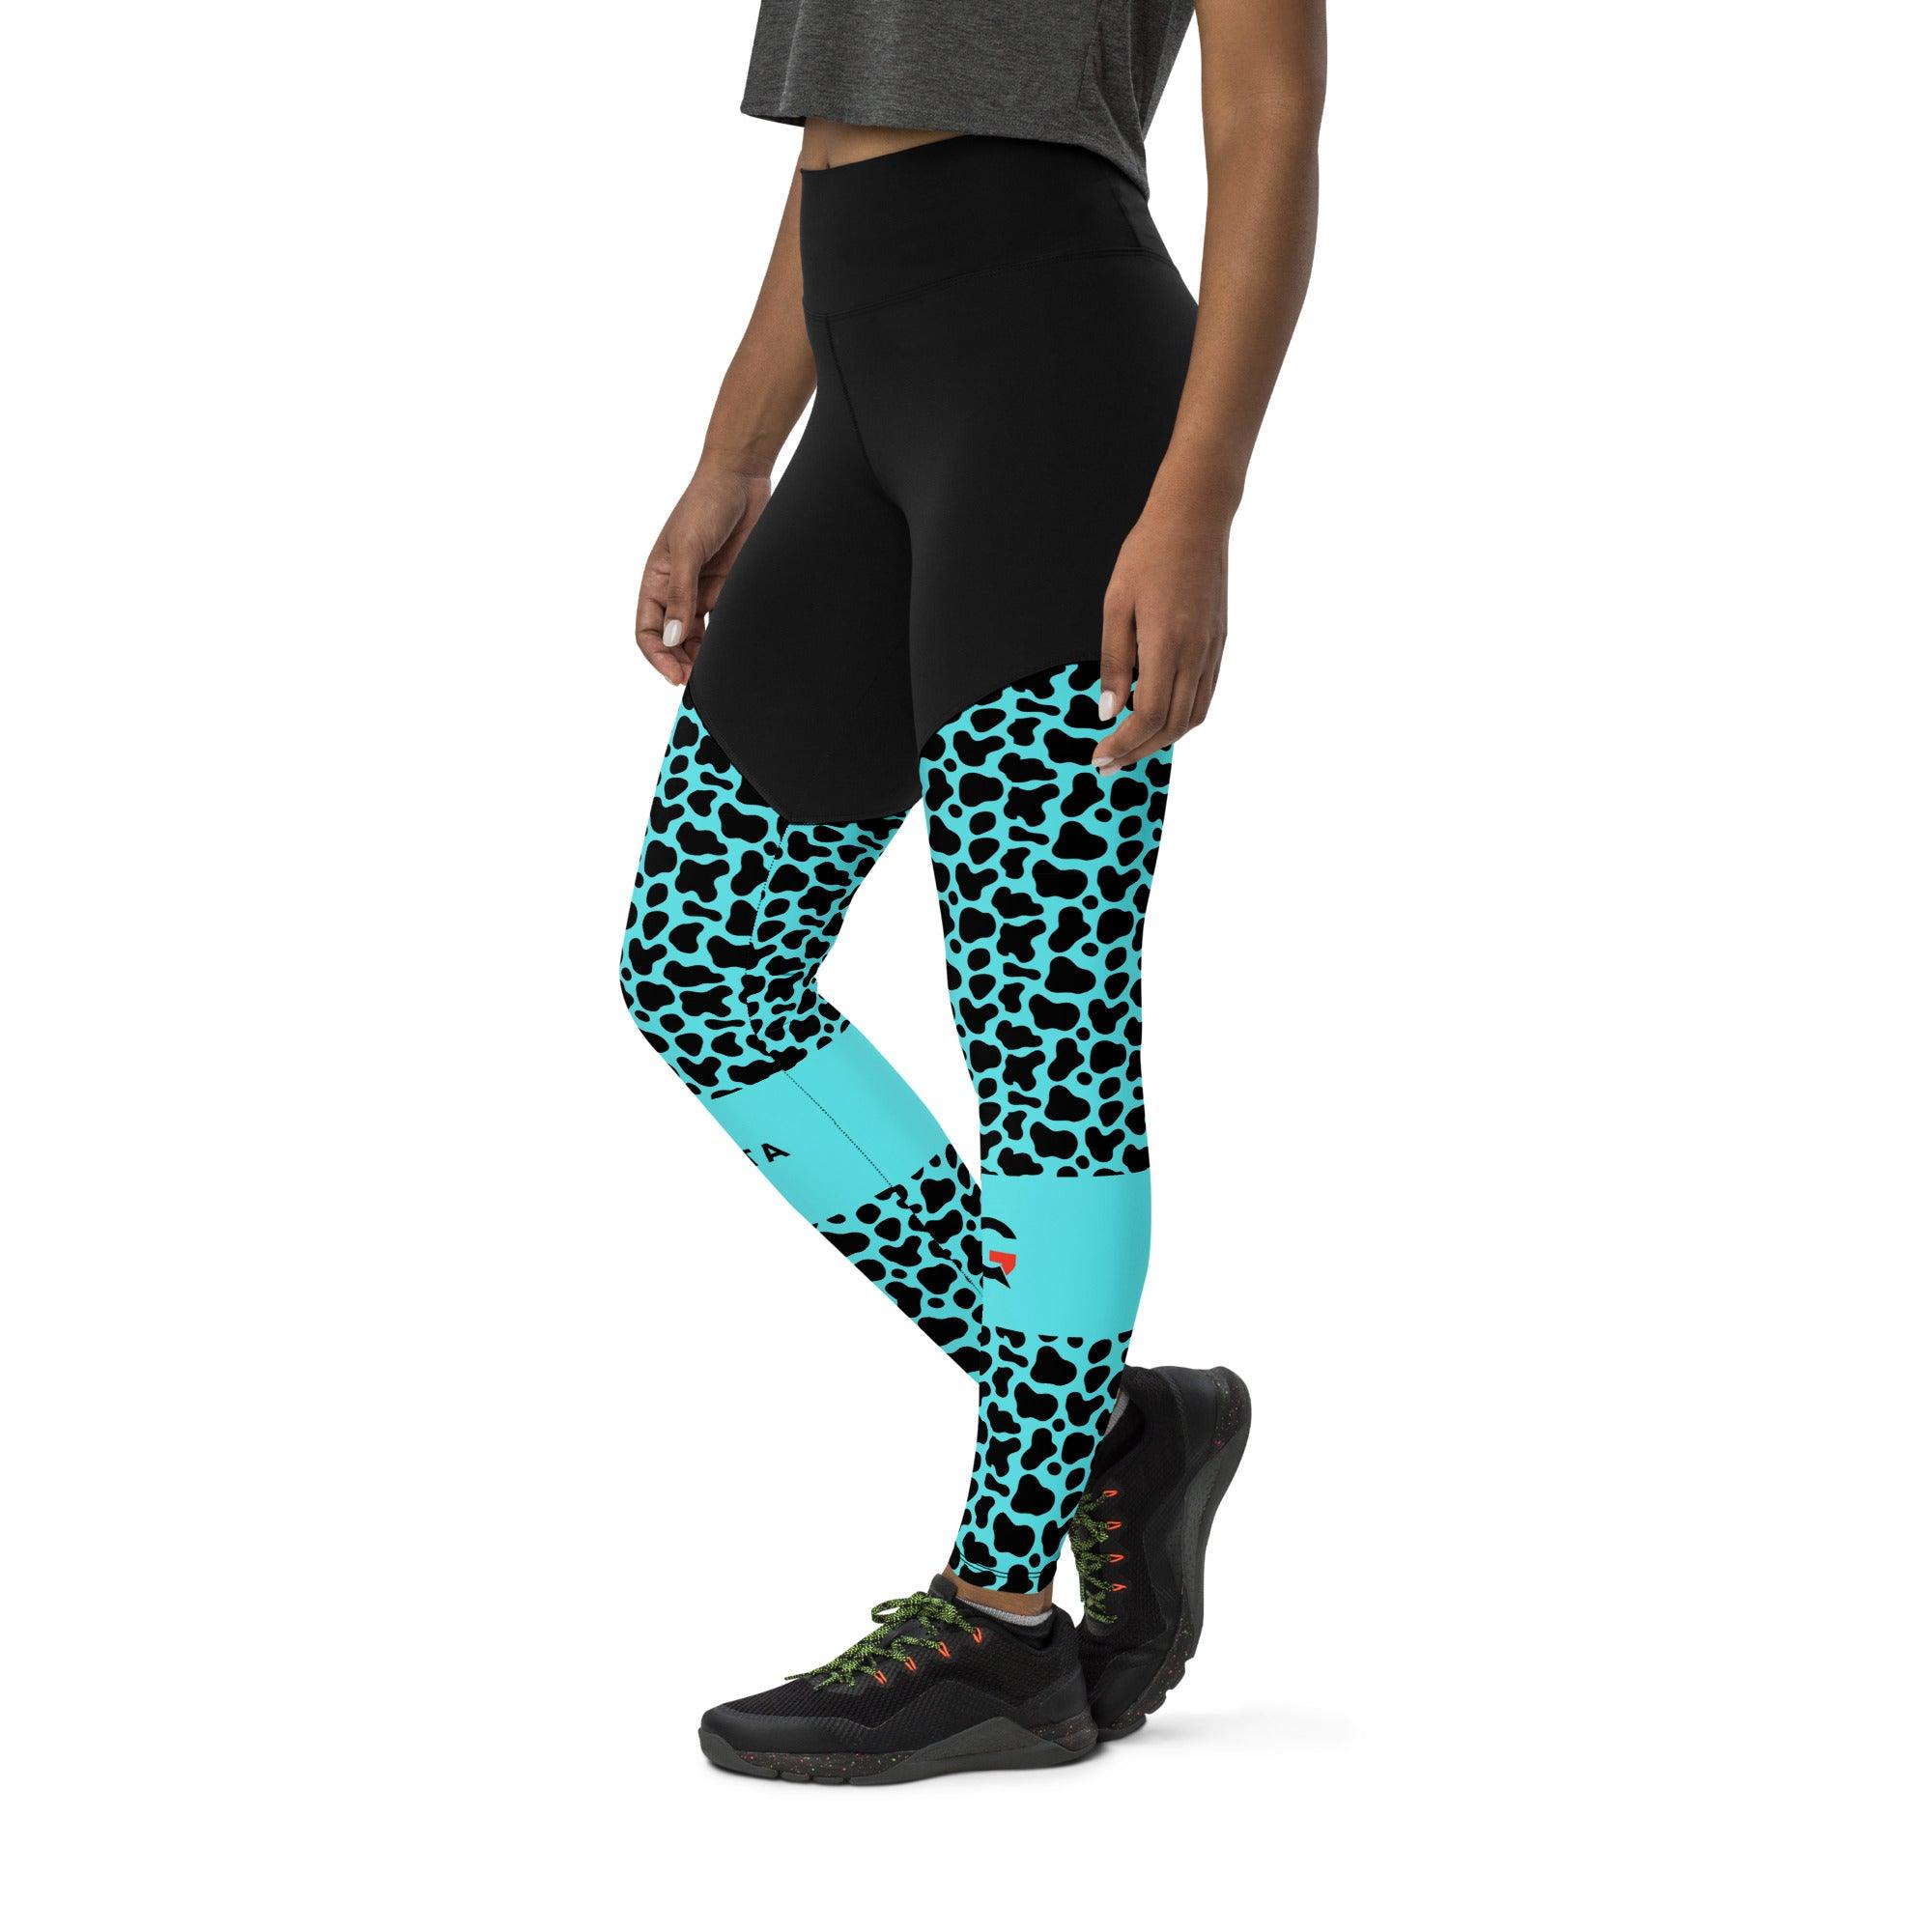 GEARTA - Aqua Cheetah Leggings for Sports